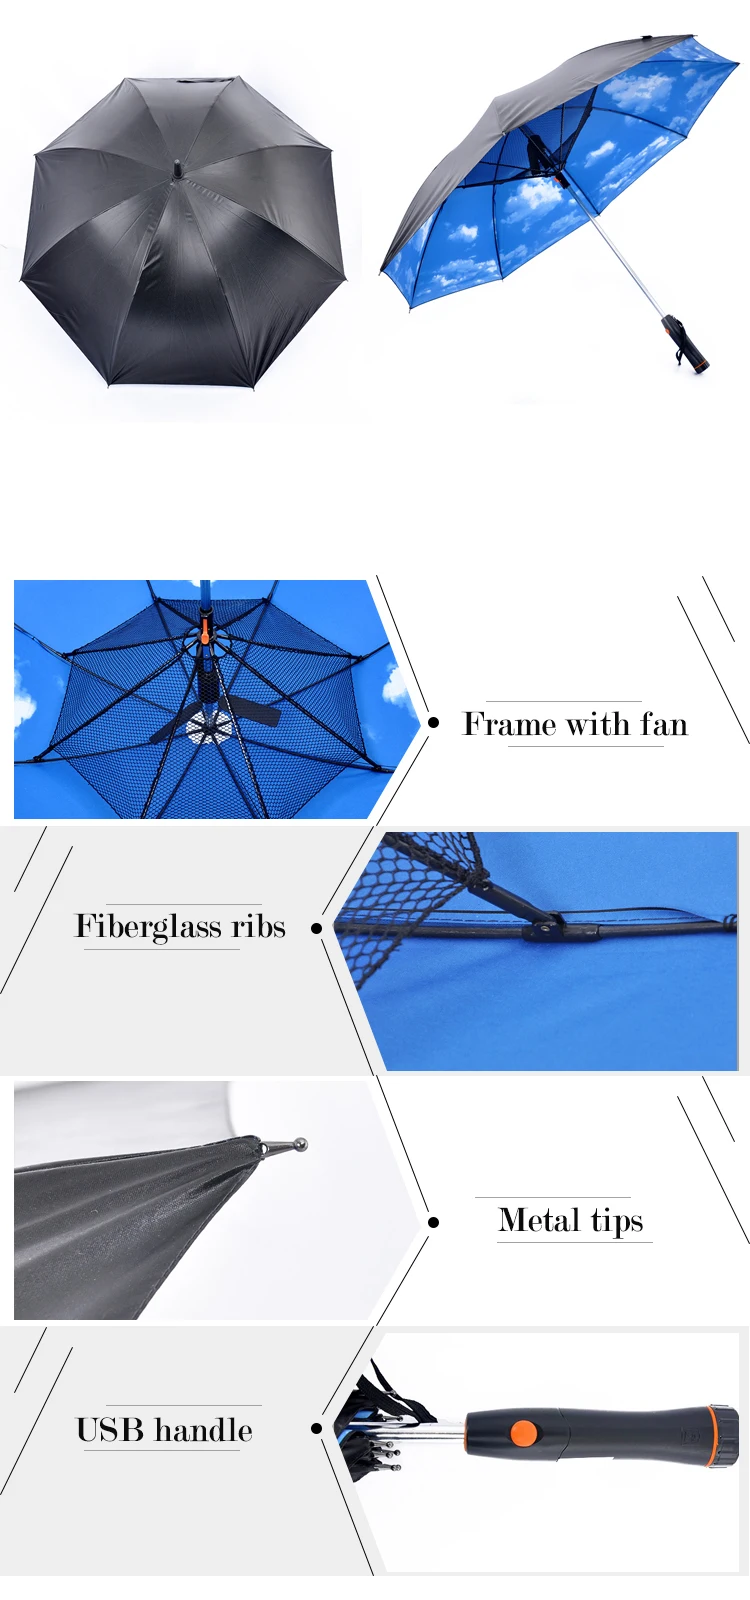 FU-03 advertising giveaway cool golf umbrella fan